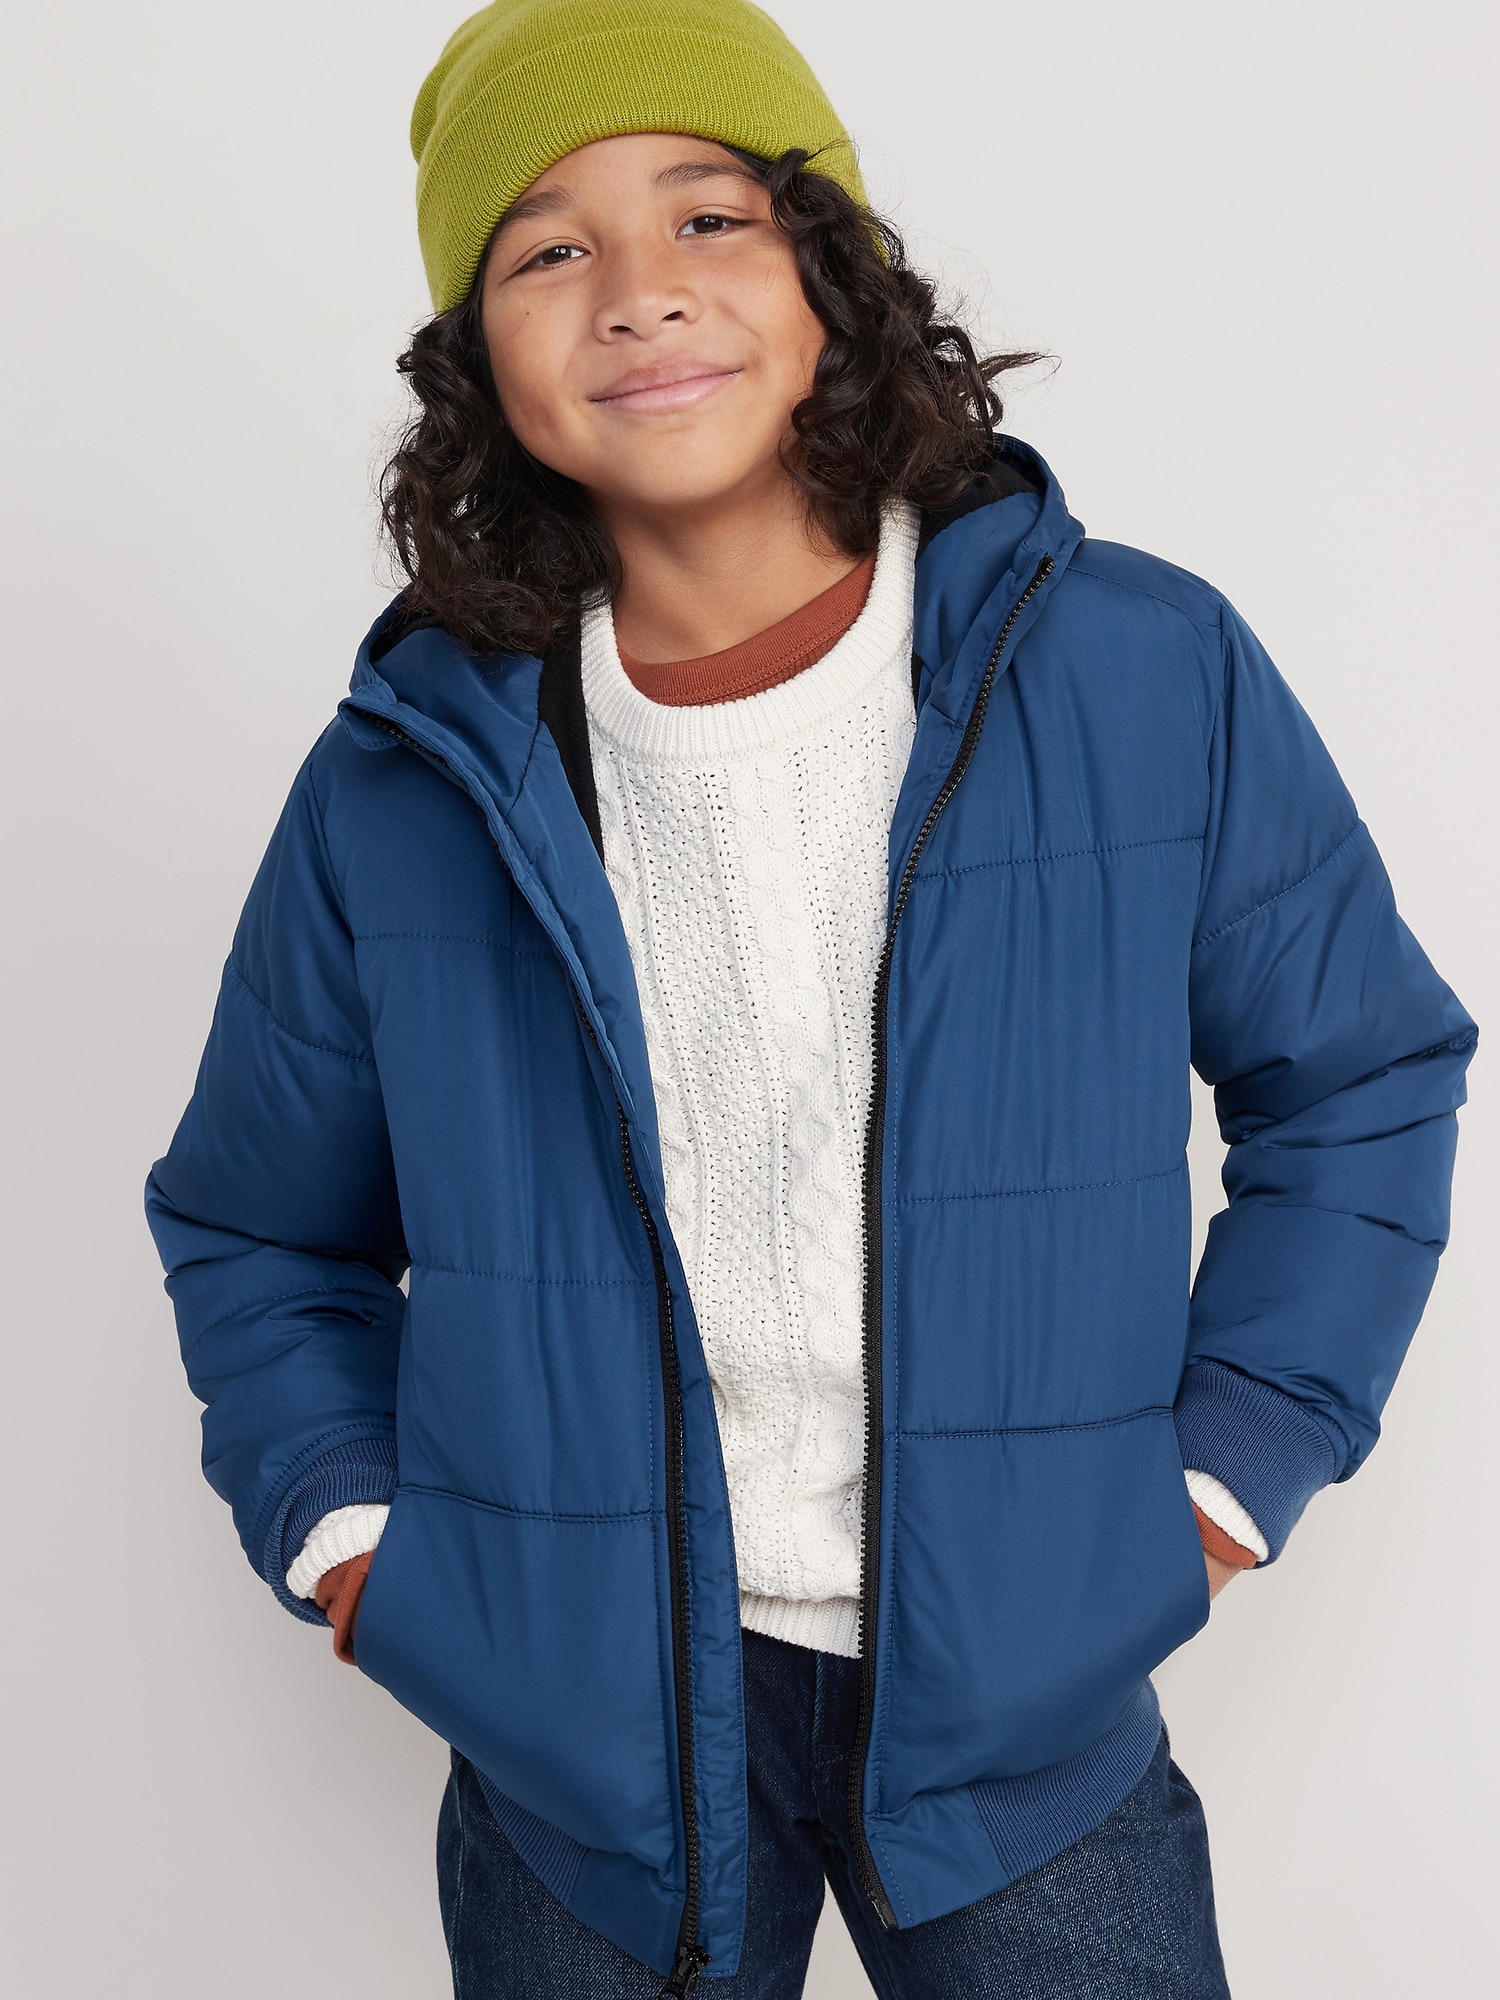 Buy Helix Fashion Men's Solid Winter Puffer Full Sleeve Jacket with Hoodie/ Jacket with Cap/Hoodie/Coat, N006, Black, XXL | MJKT_N006_BLACK_XXL at  Amazon.in